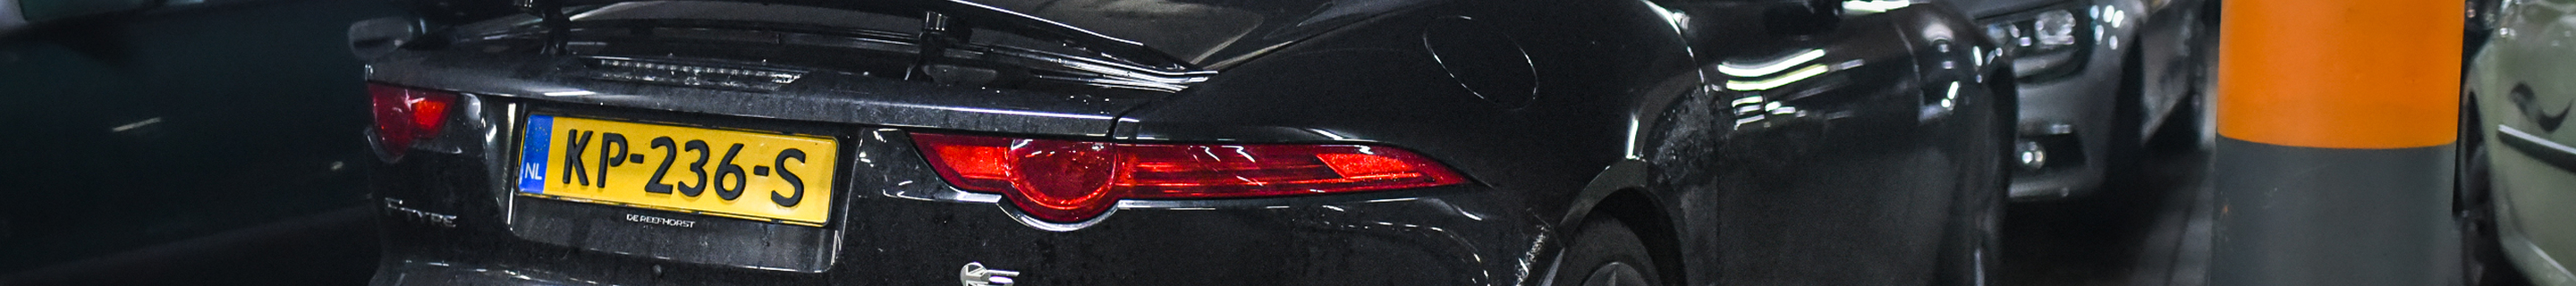 Jaguar F-TYPE S Convertible British Design Edition